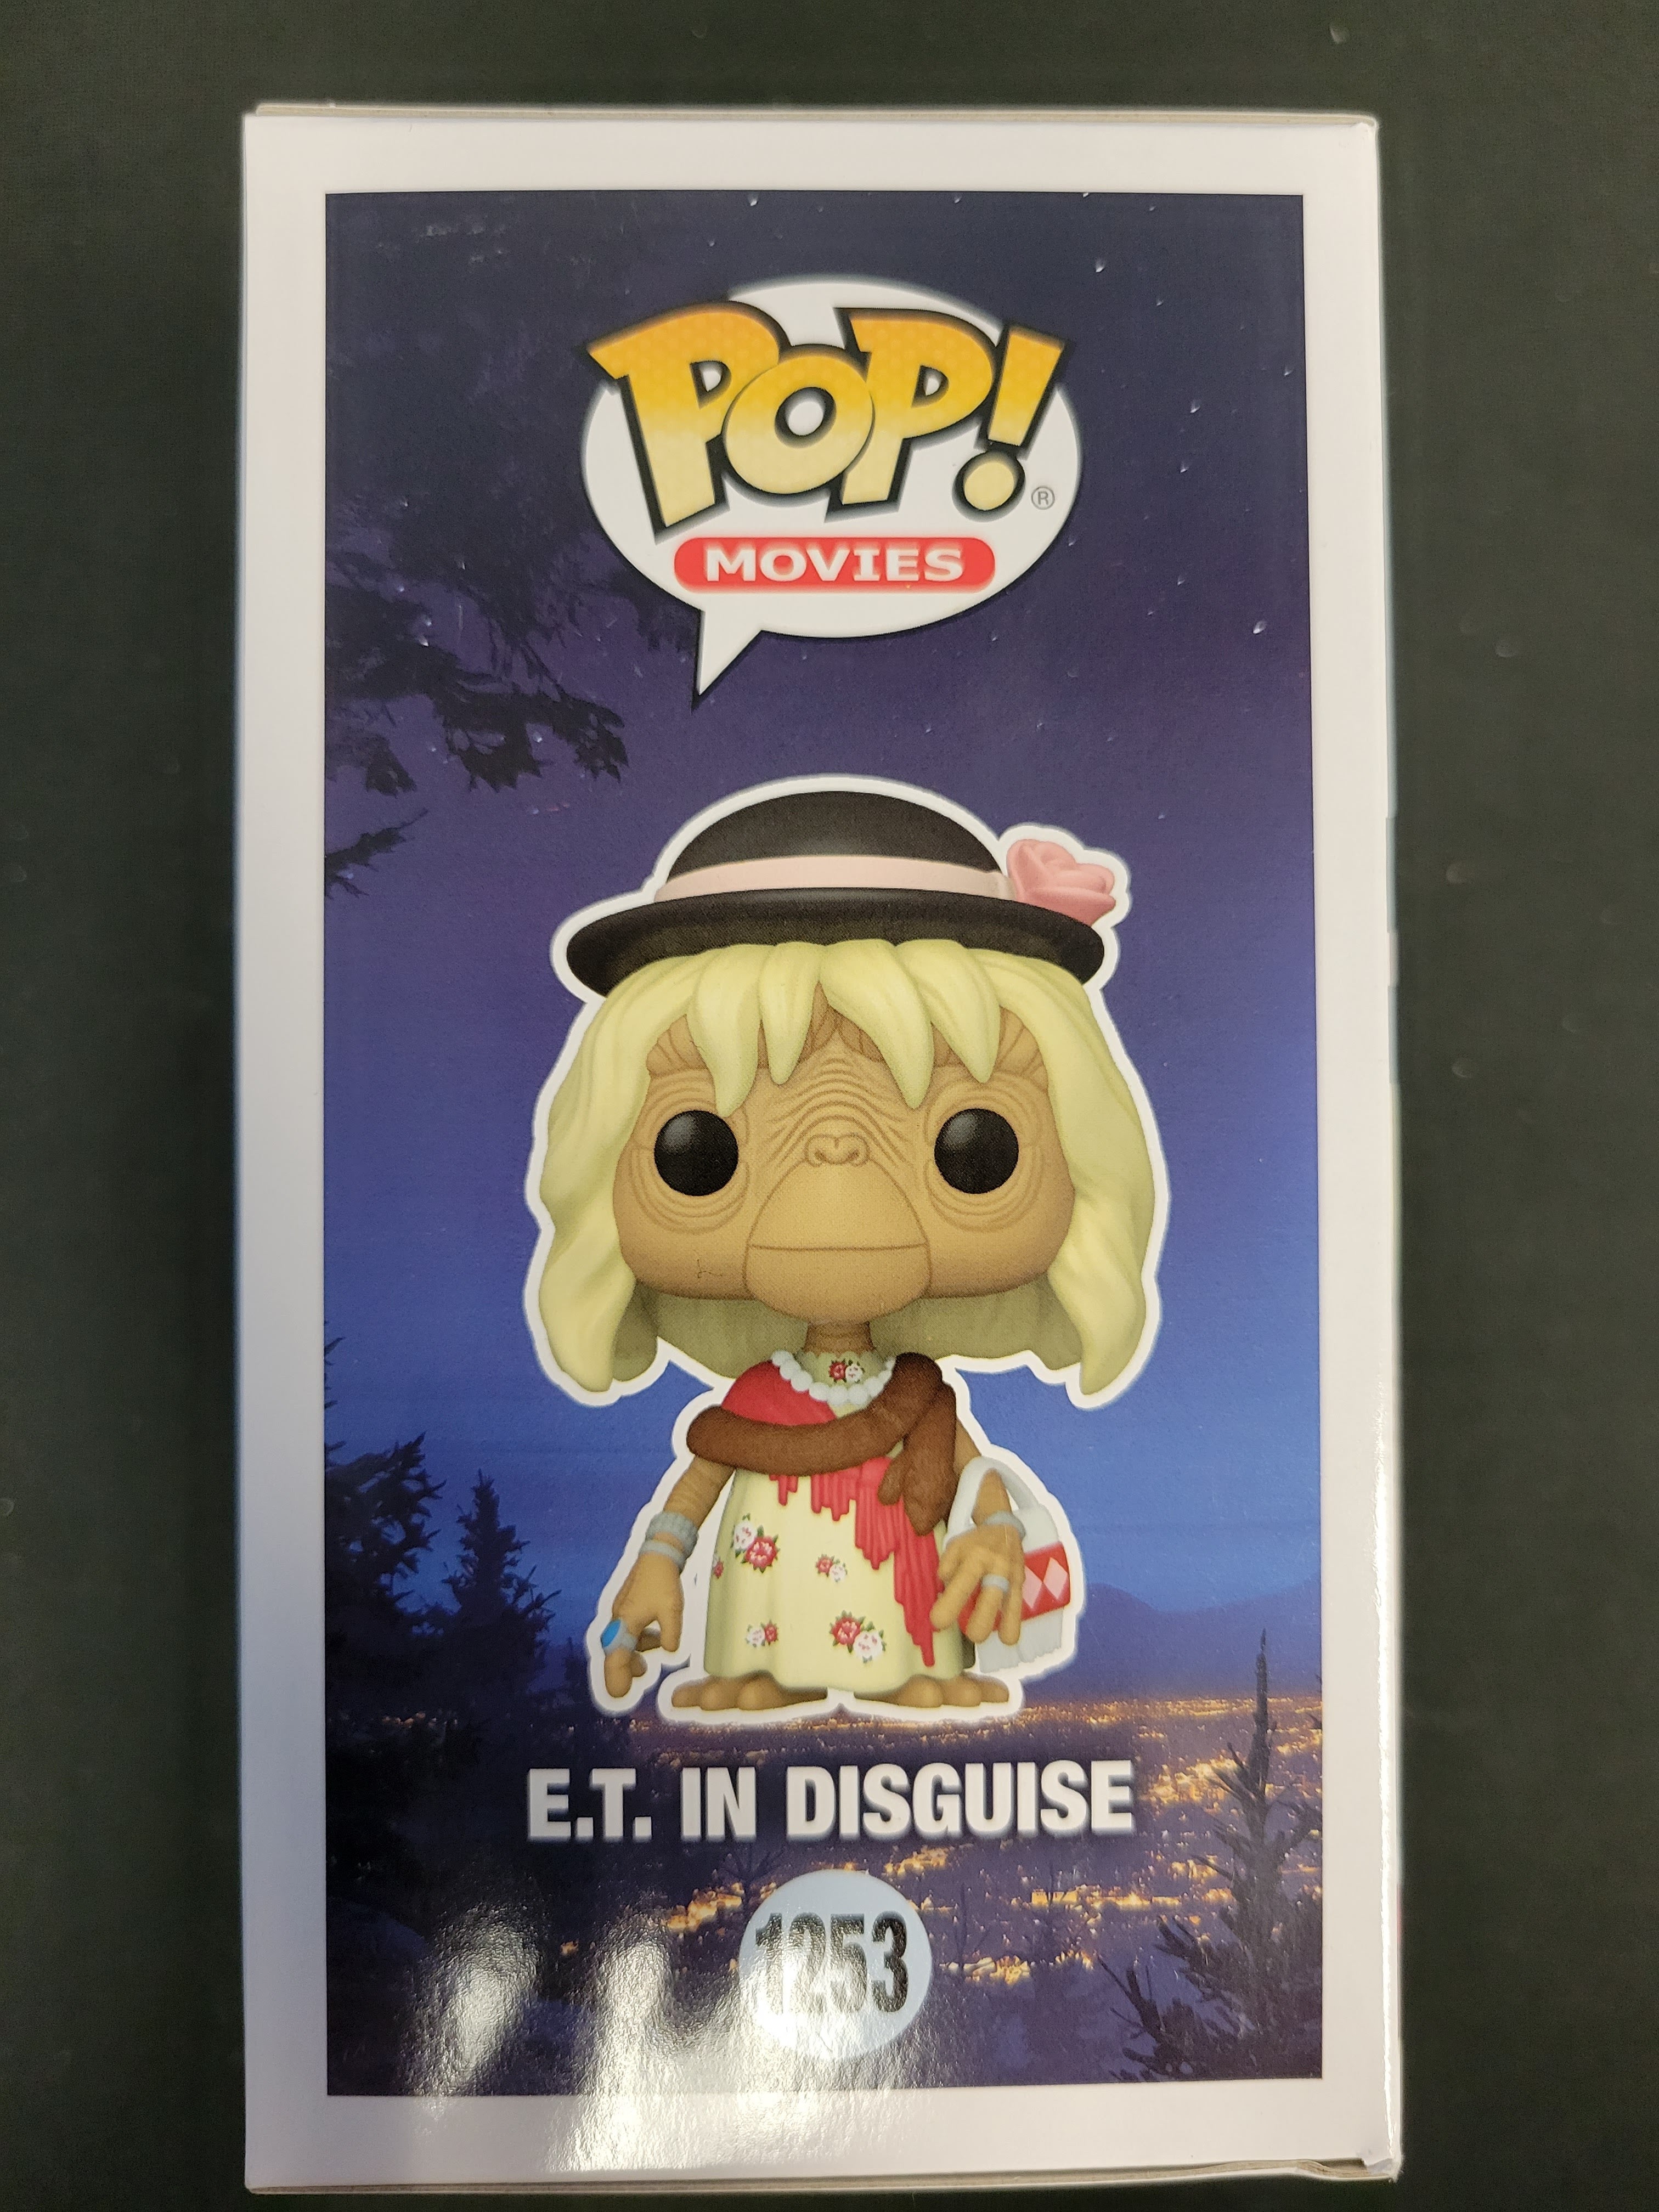 Funko Pop: E.T. The Extra-Terrestrial: E.T. In Disguise #1253 Autographed by Matthew DeMeritt